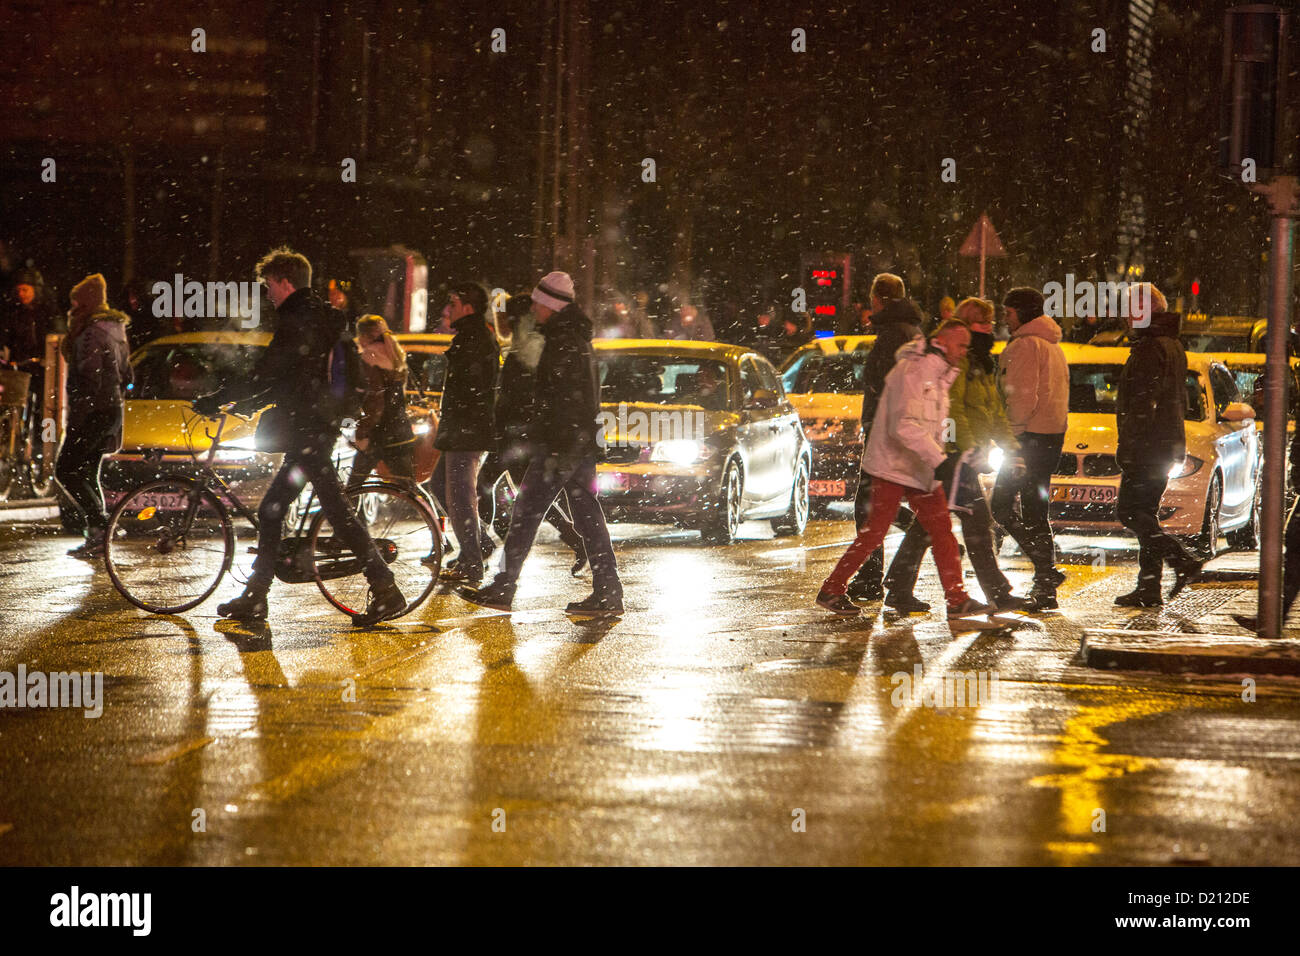 Bike, cycle traffic in the city, at night, snowfall, bike path. Copenhagen, Denmark, Europe. Stock Photo